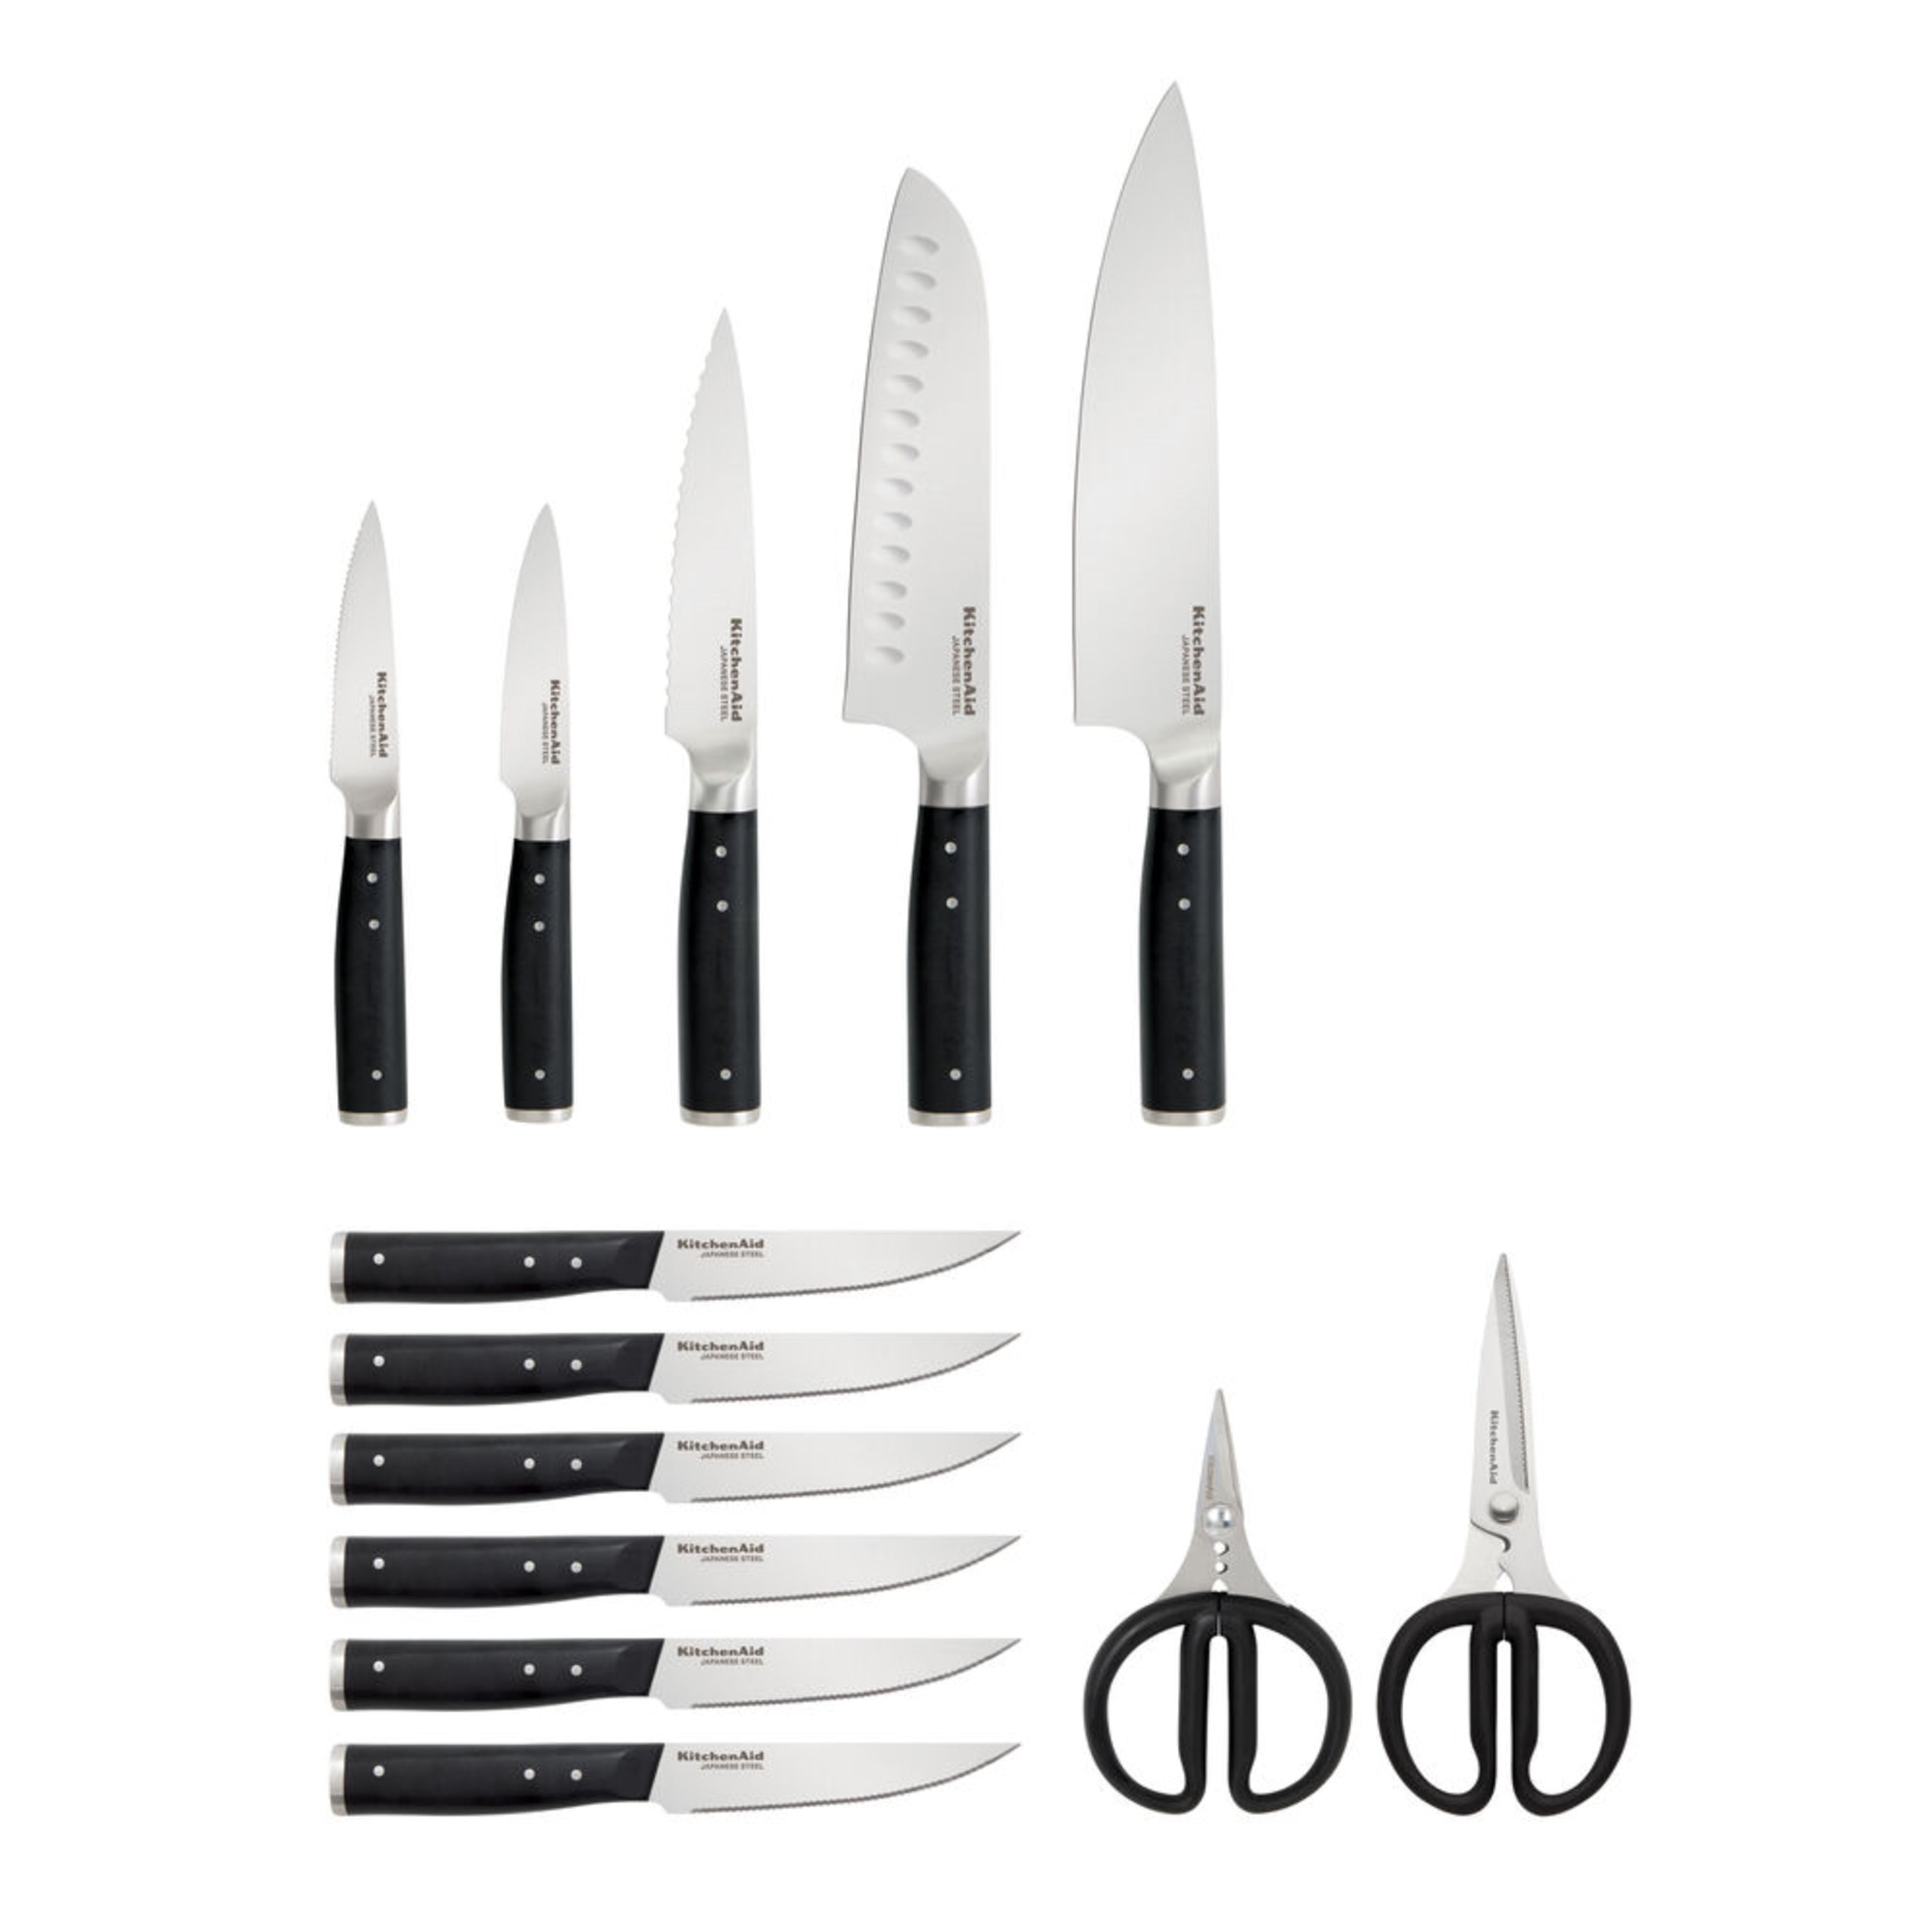 KitchenAid's 16-piece Knife Set w/ built-in sharpener at $56 (Reg